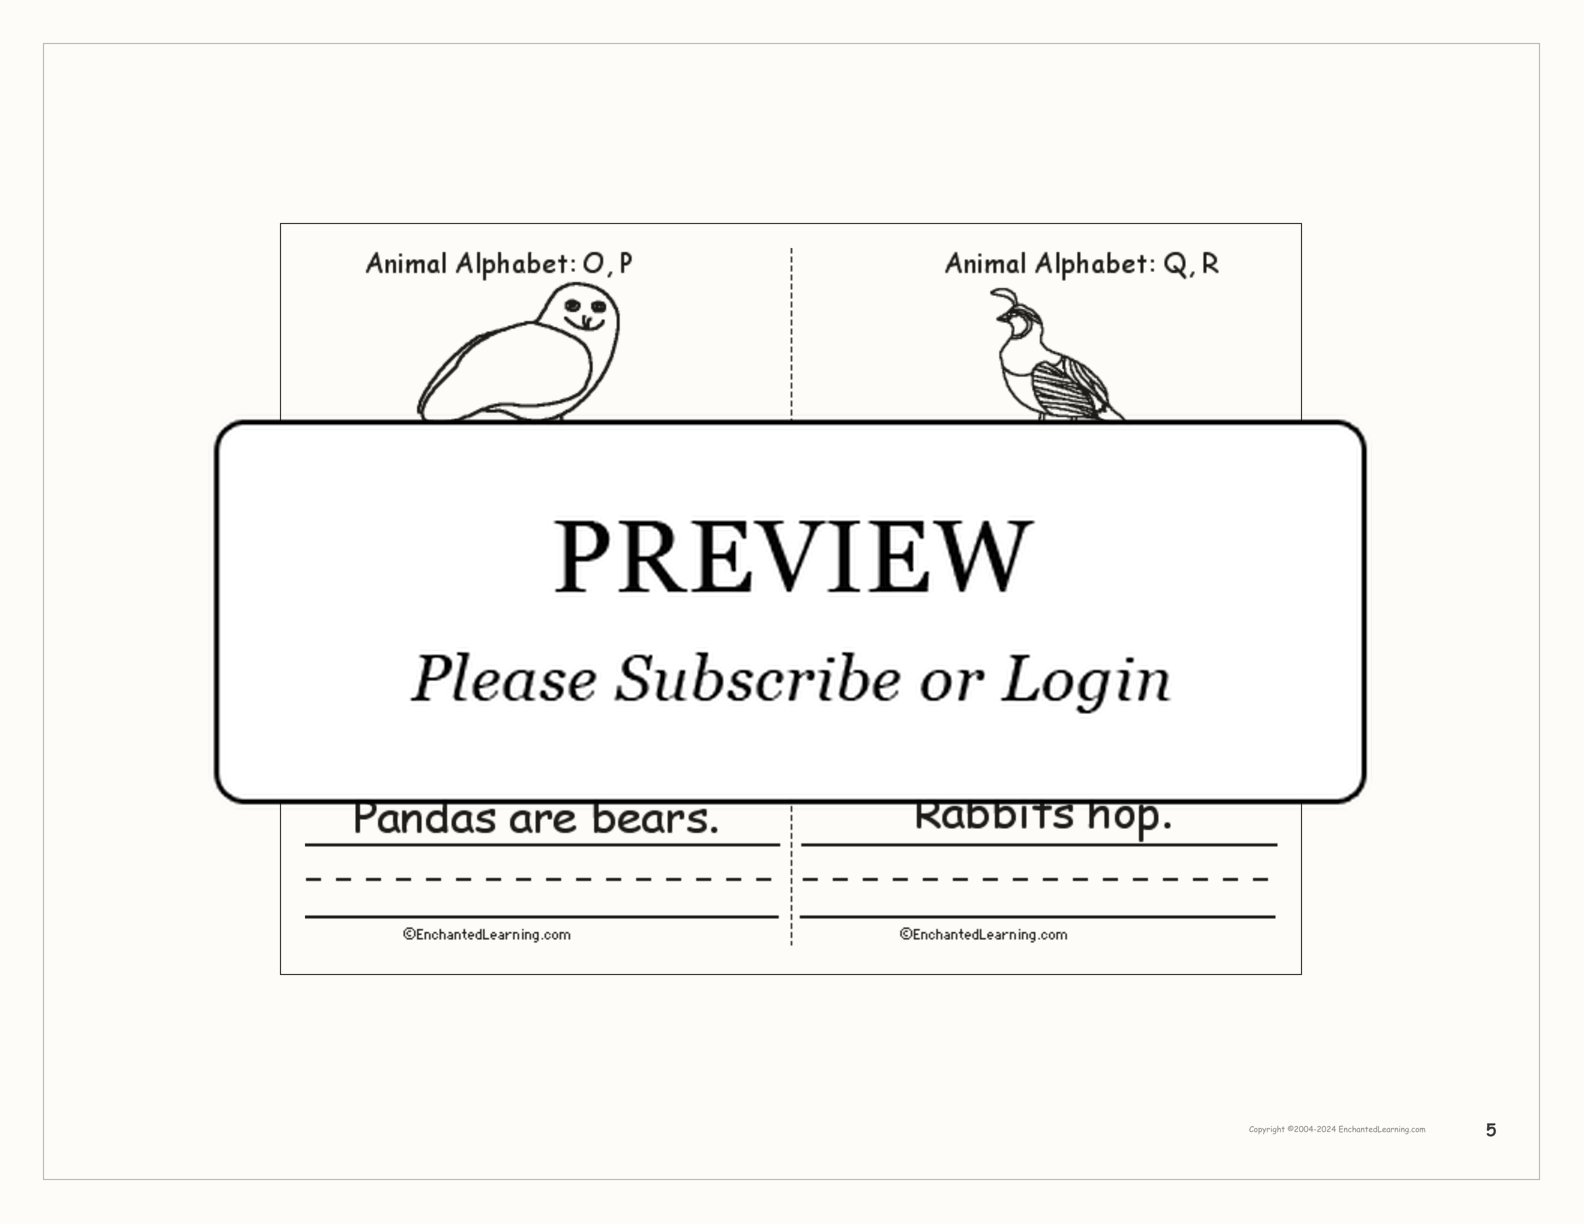 Animal Alphabet Book interactive printout page 5